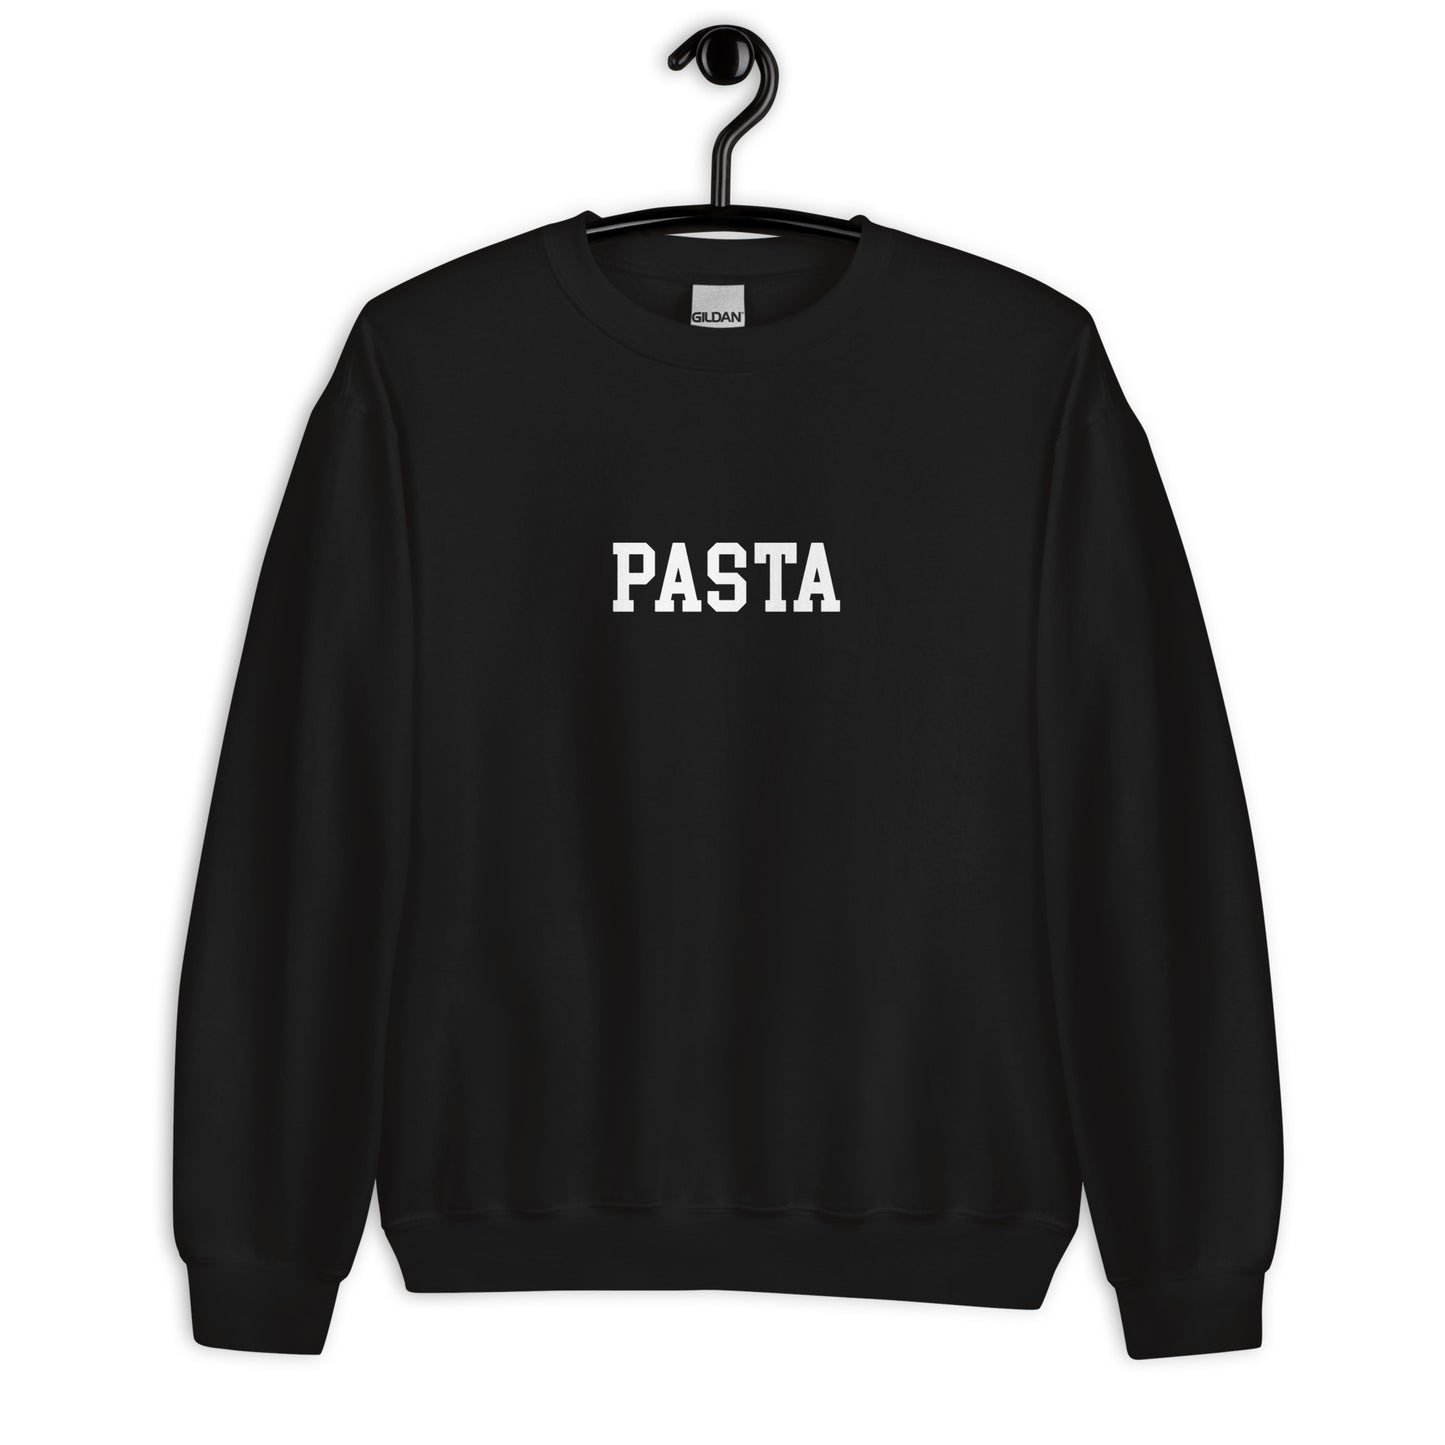 Pasta Sweatshirt - Arched Font